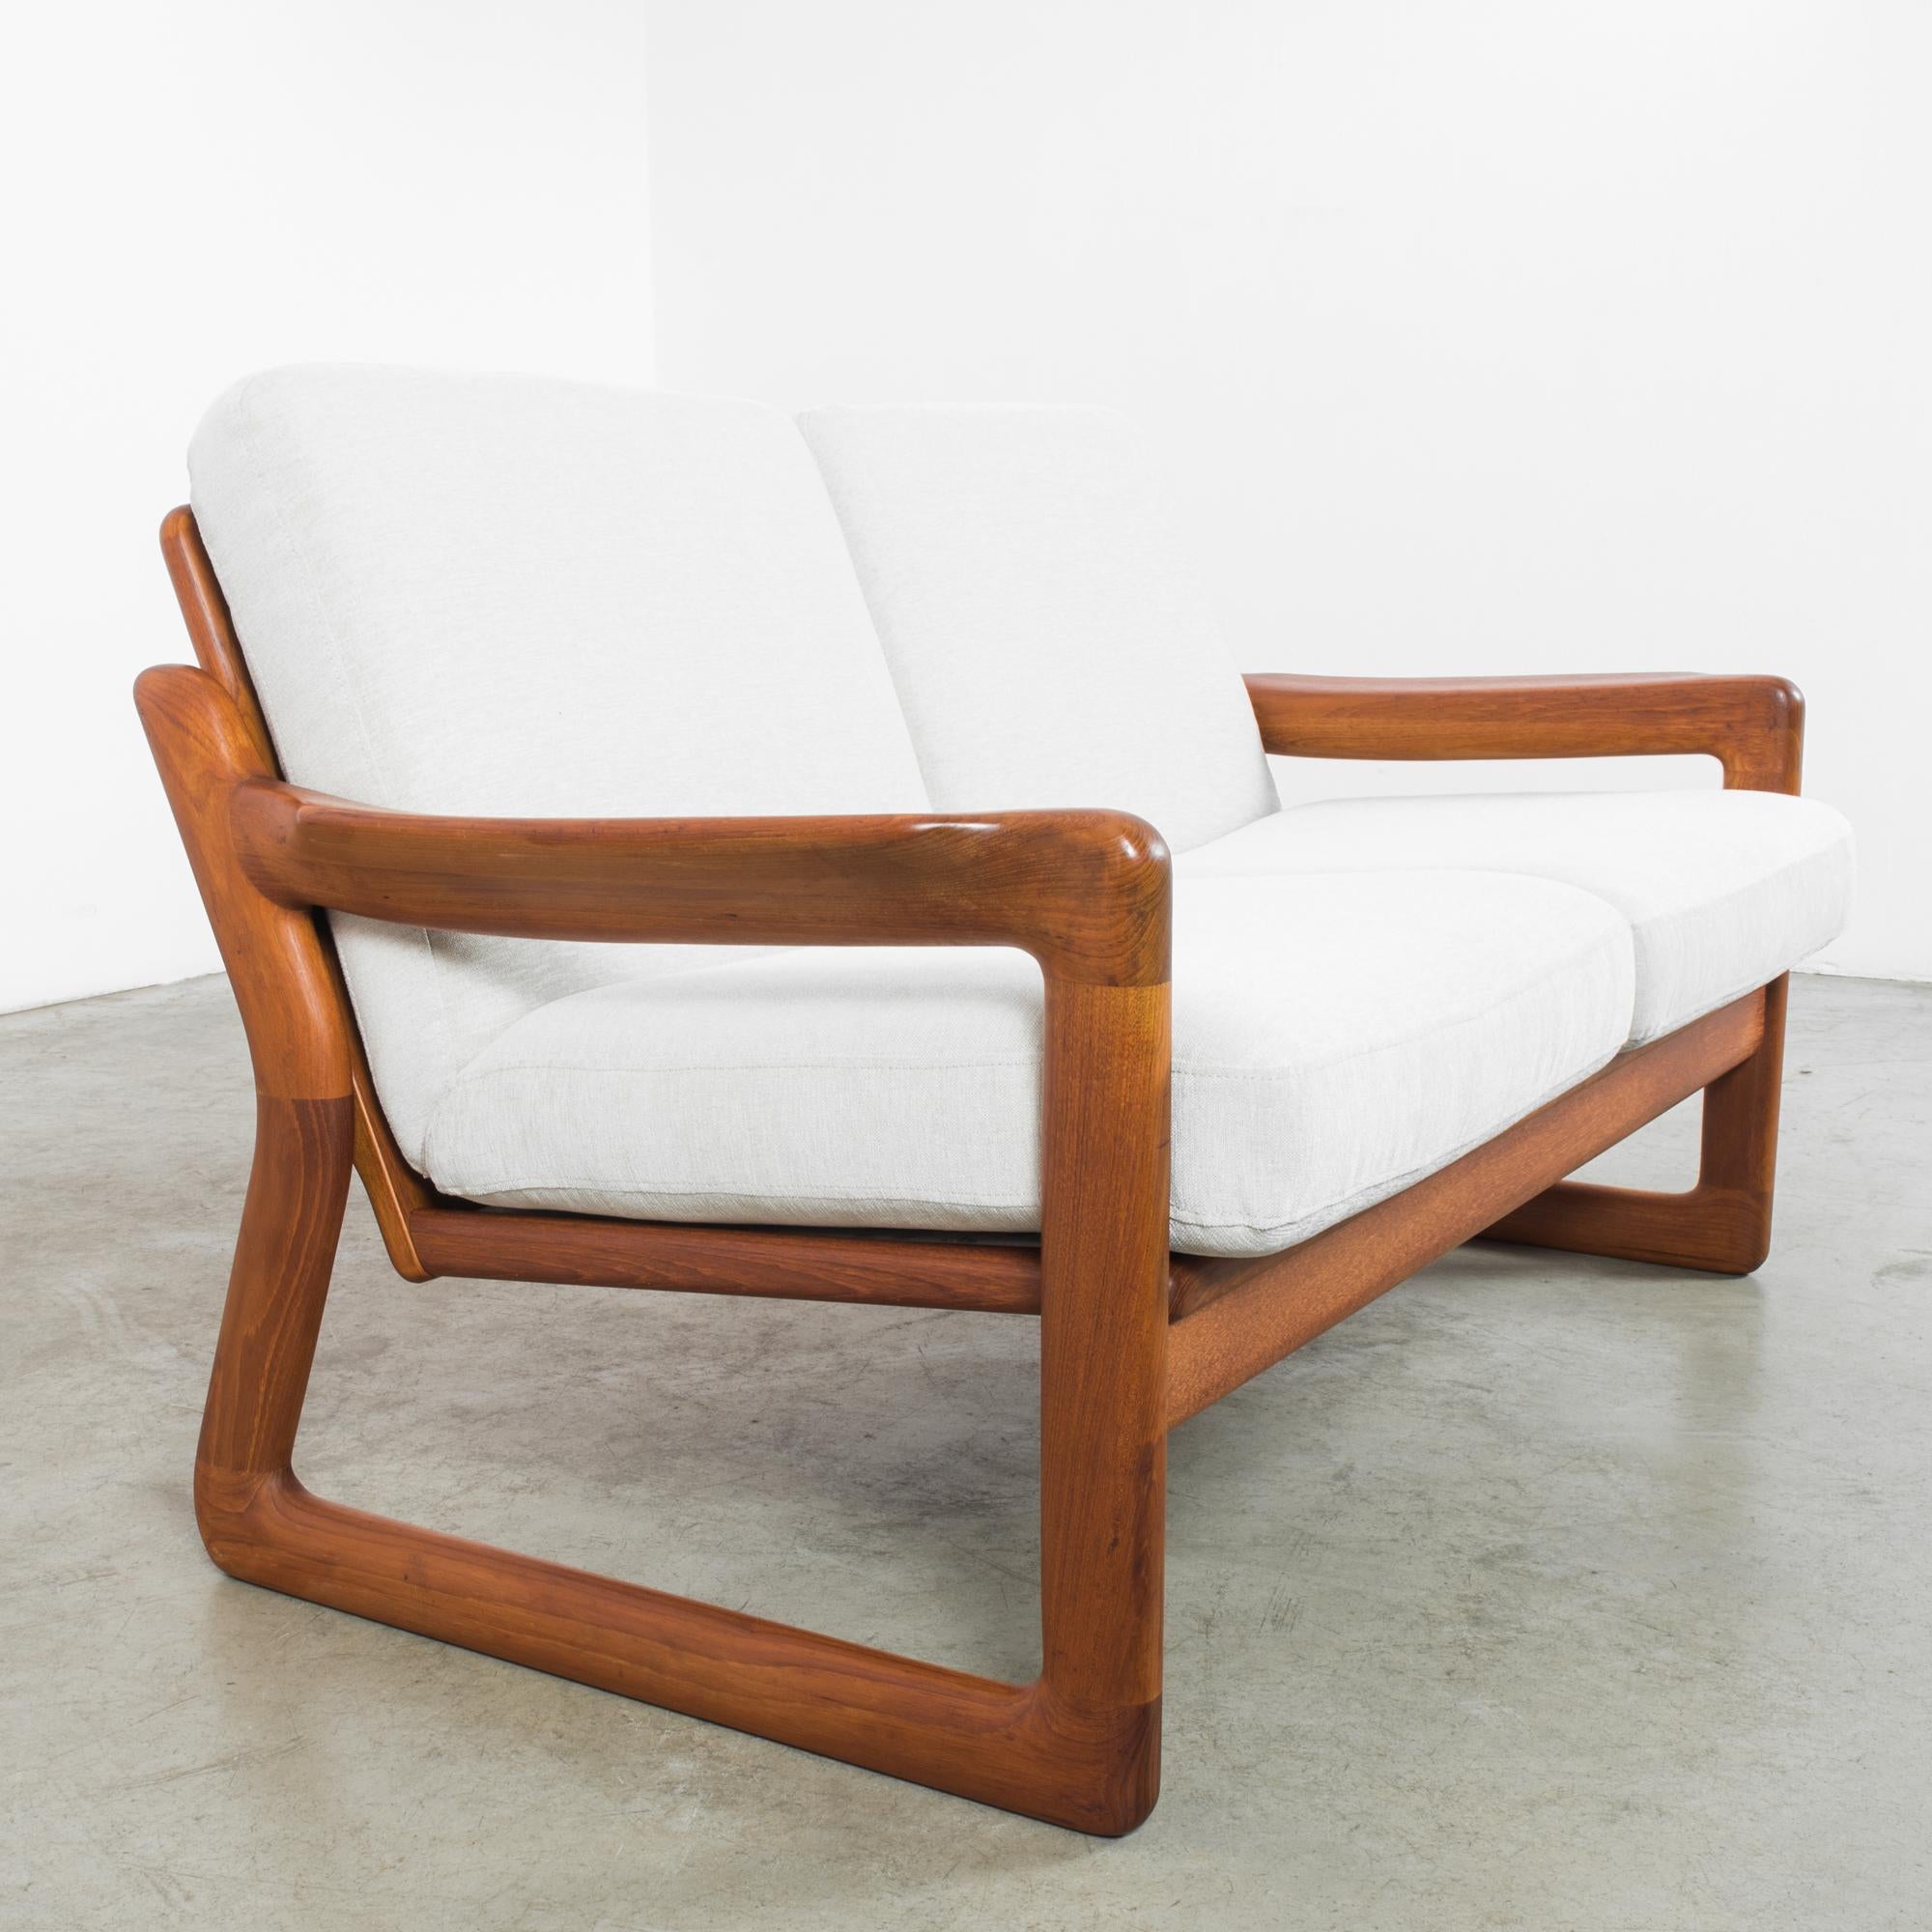 20th Century 1960s Danish Retro Teak Sofa with Upholstered Seat and Back